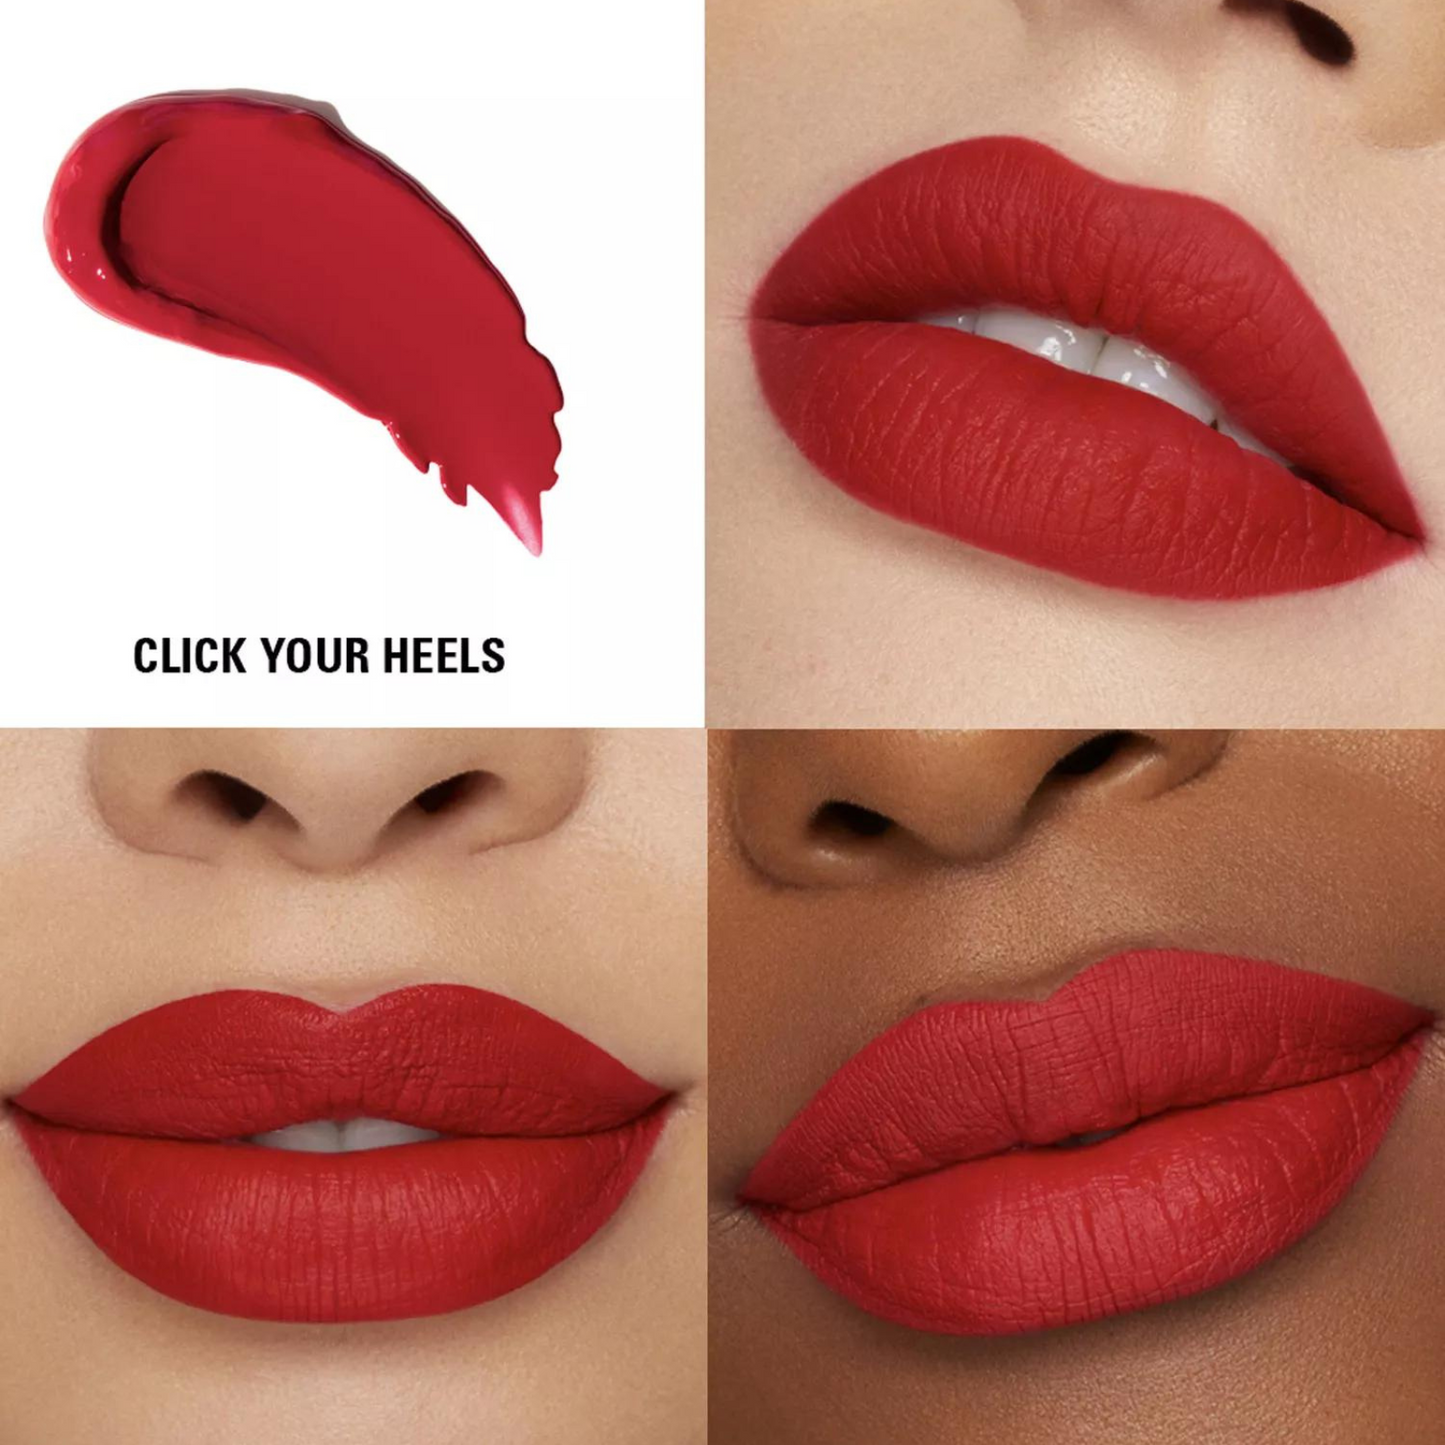 Kylie Cosmetics - Kylie Jenner x Wizard of Oz Matte Lip Paint Set